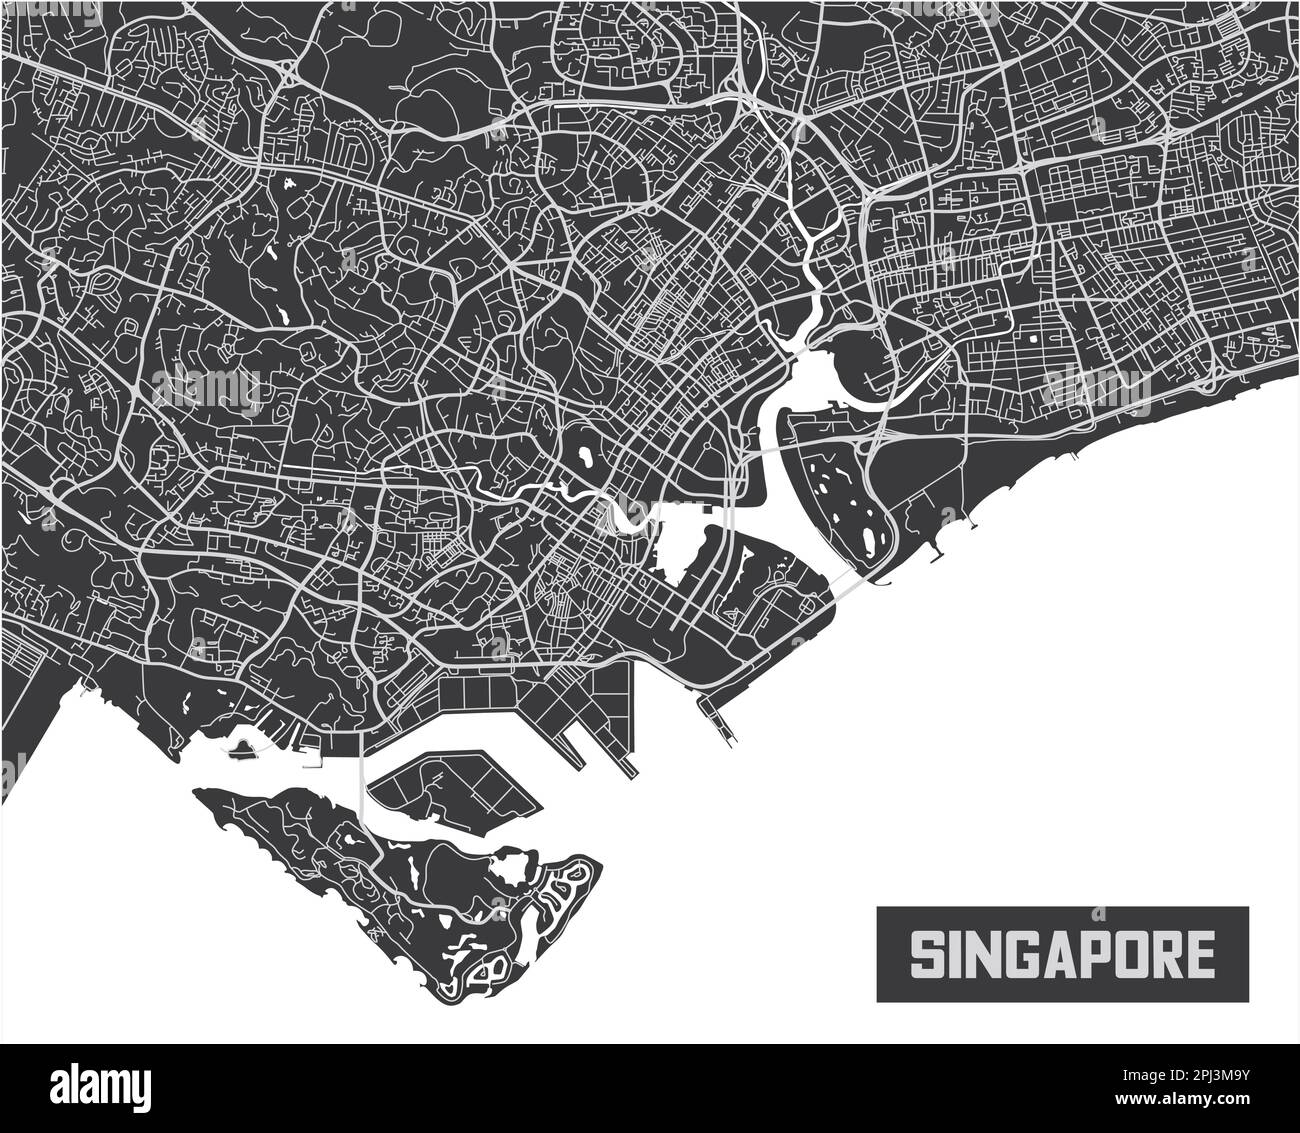 Minimalistic Singapore city map poster design. Stock Vector